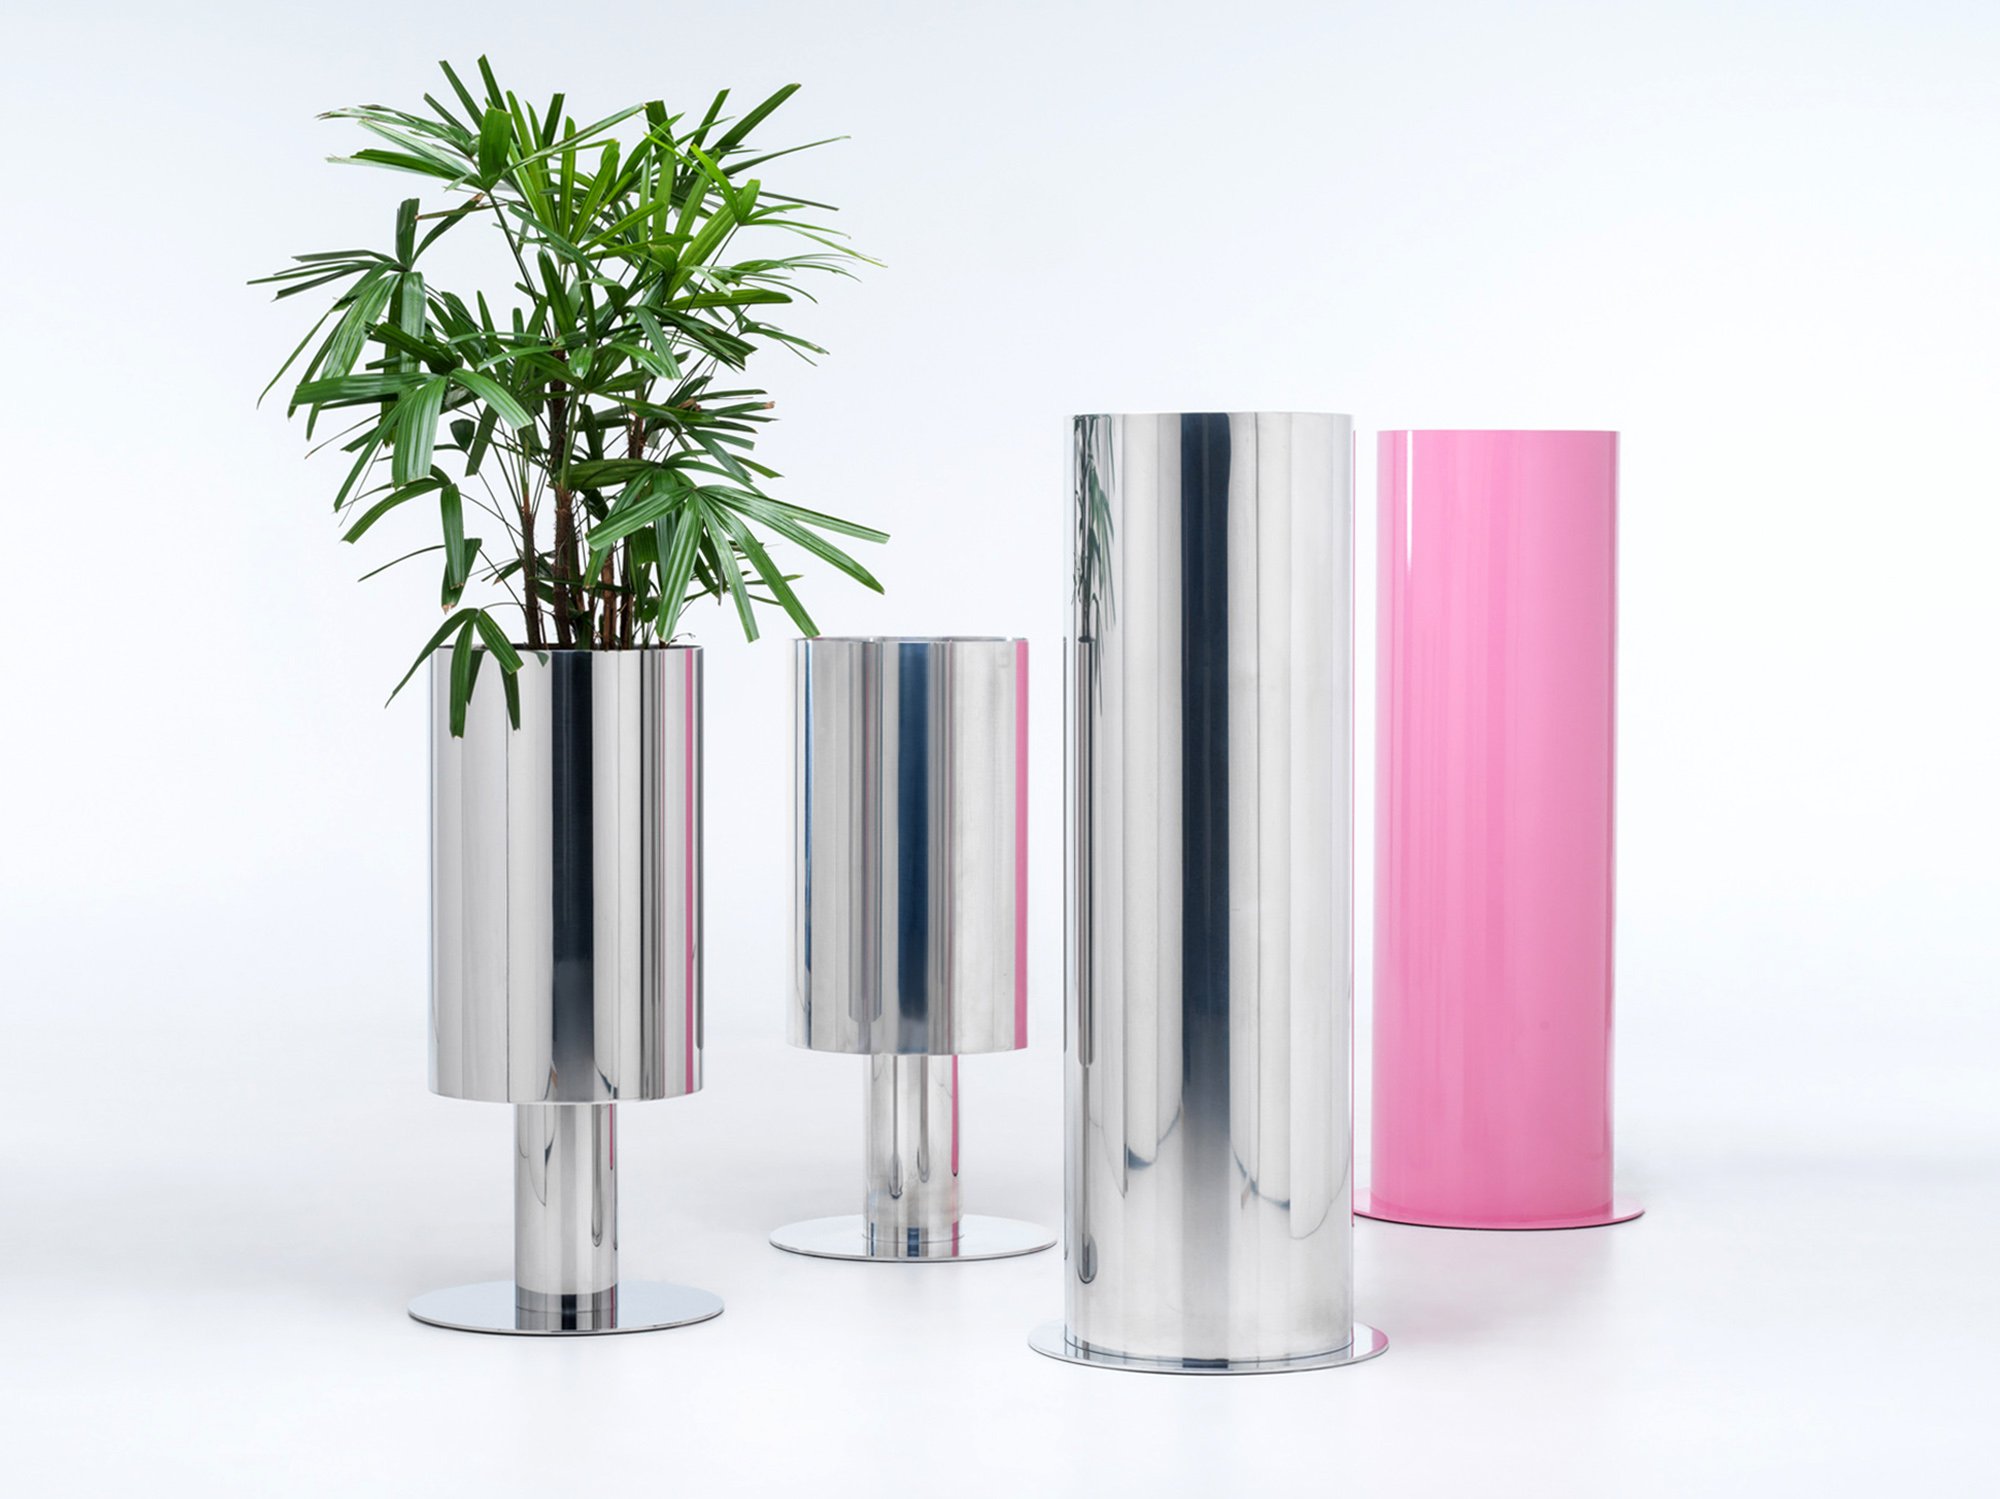 b2-b4-planters-pink-mirror-polished-stainless-steel.jpg